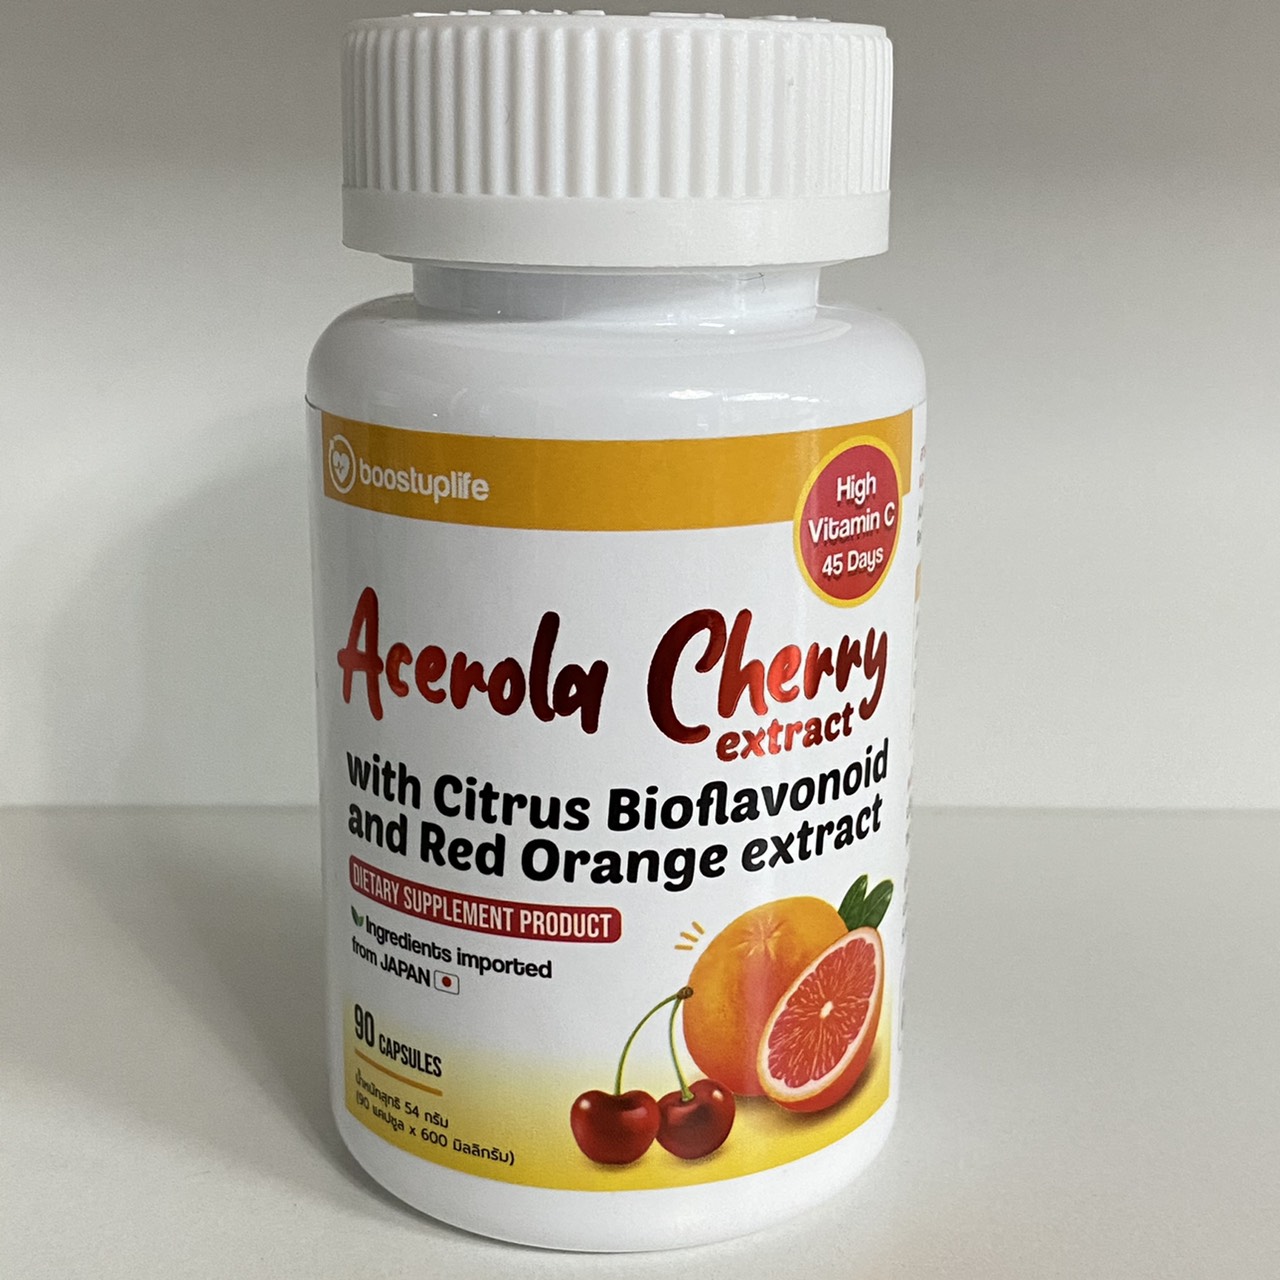 Vitamin C Boostuplife Acerola Cherry plus Citrus Bioflavonoid วิตามินซี ธรรมชาติจากประเทศญี่ปุ่น 90 แคปซูล